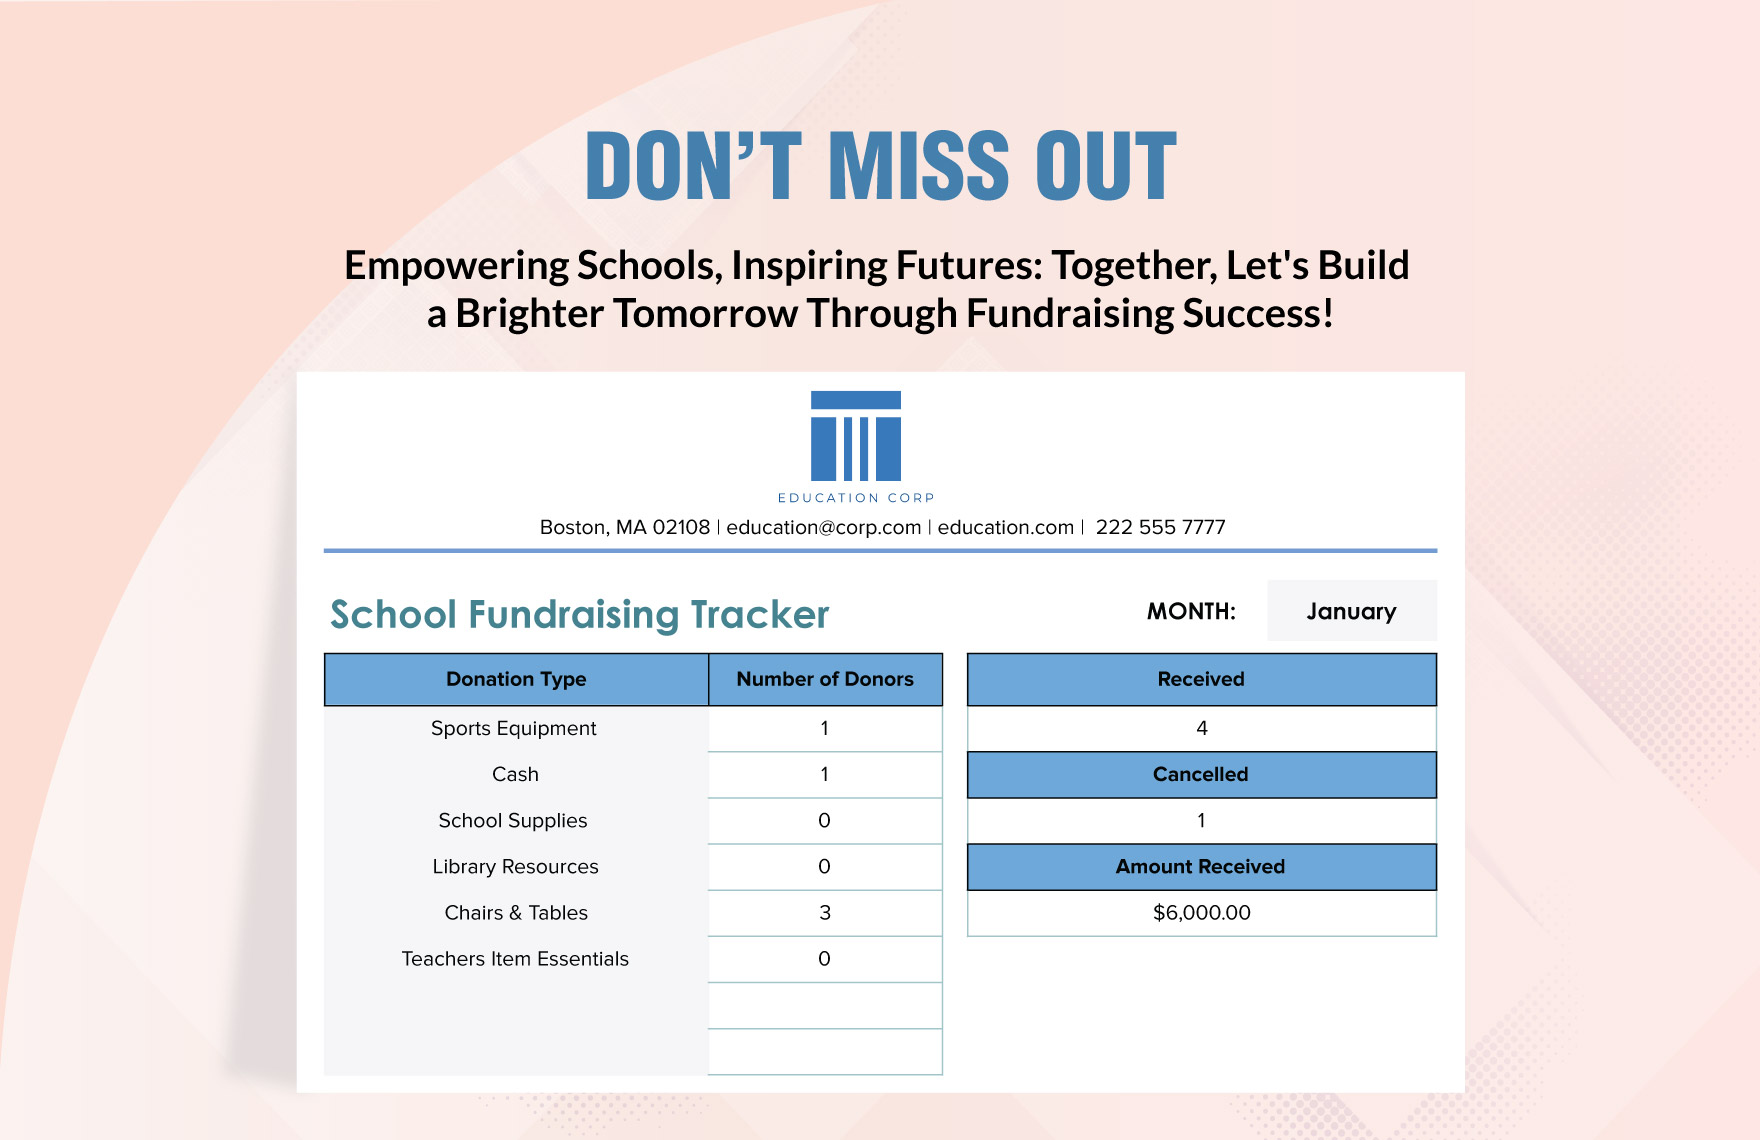 School Fundraising Tracker Template